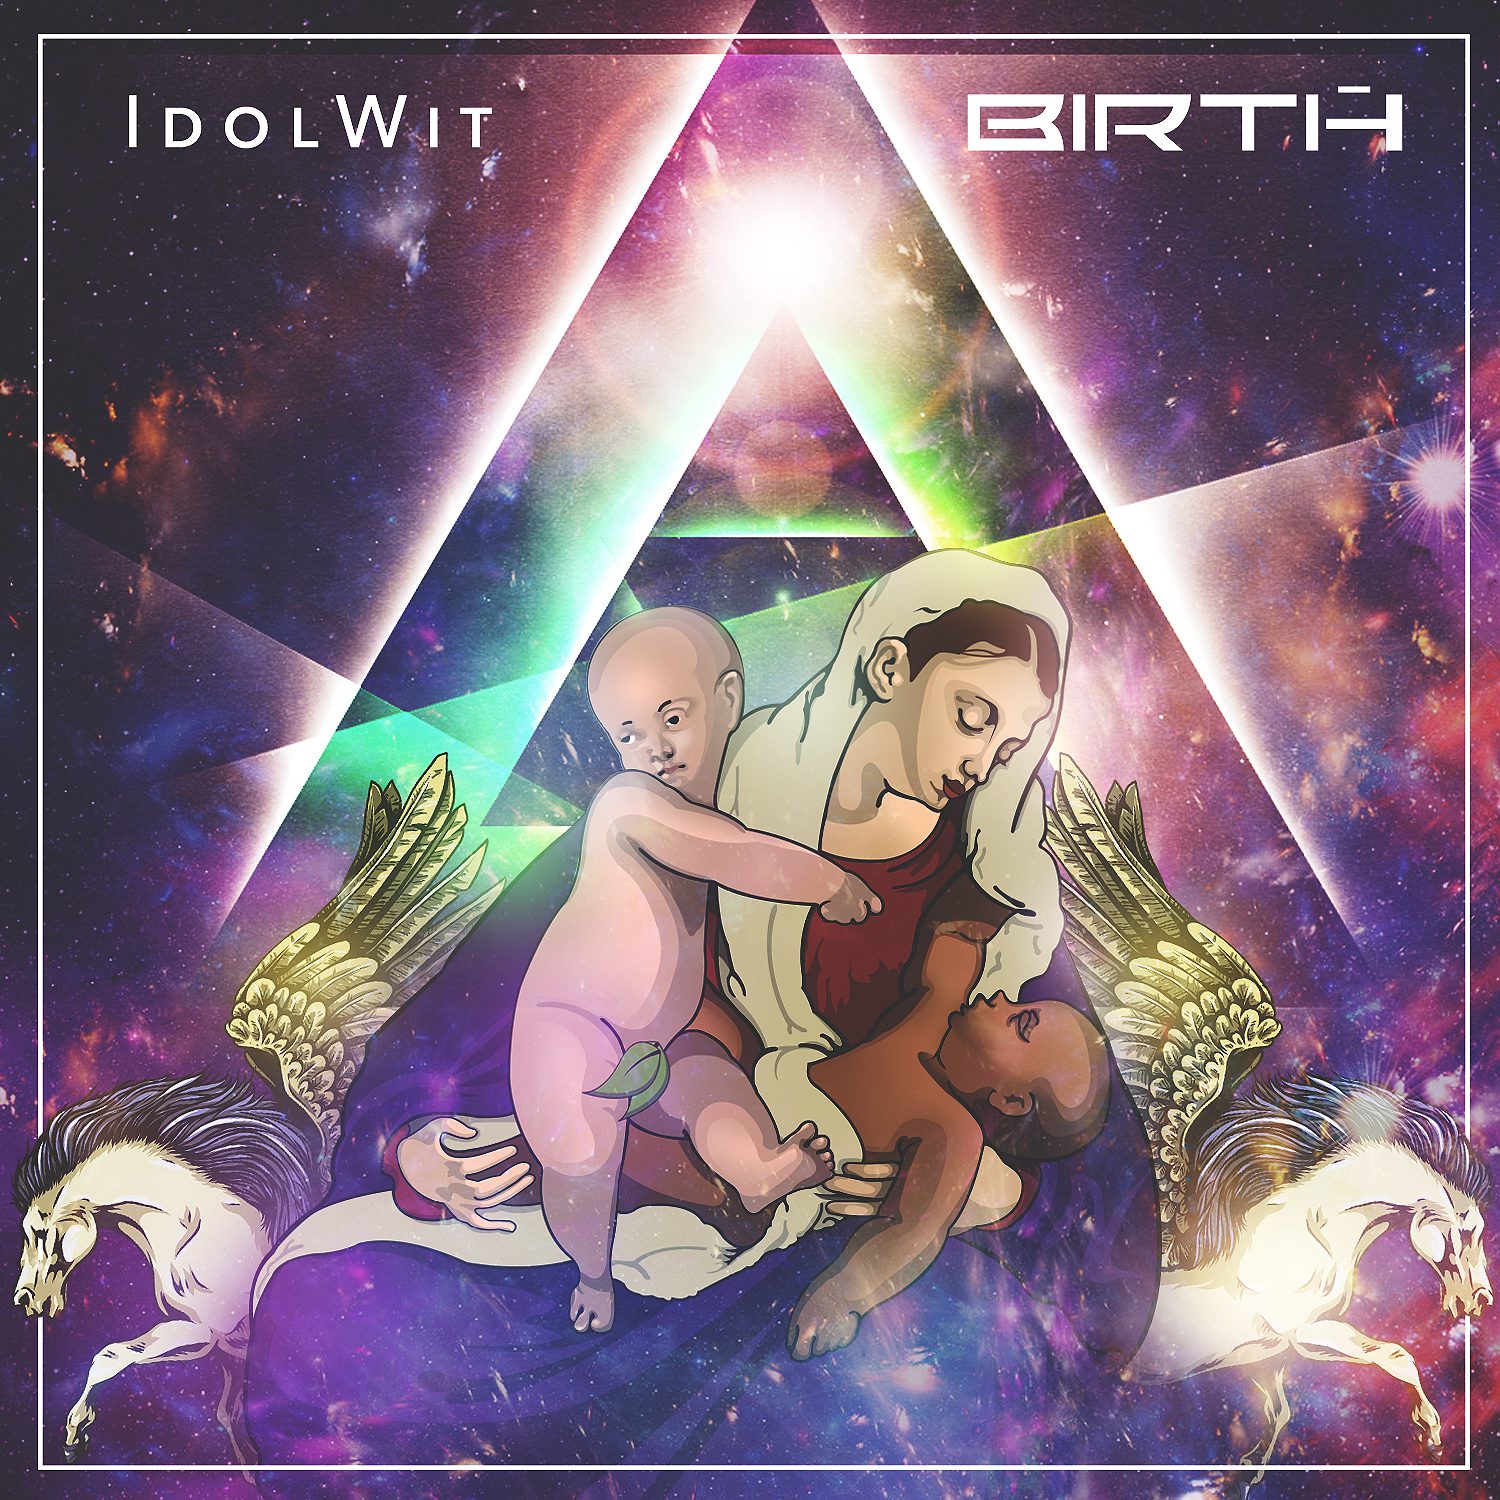 Rising Hip Hop Duo IdolWit Drops New Single - Birth